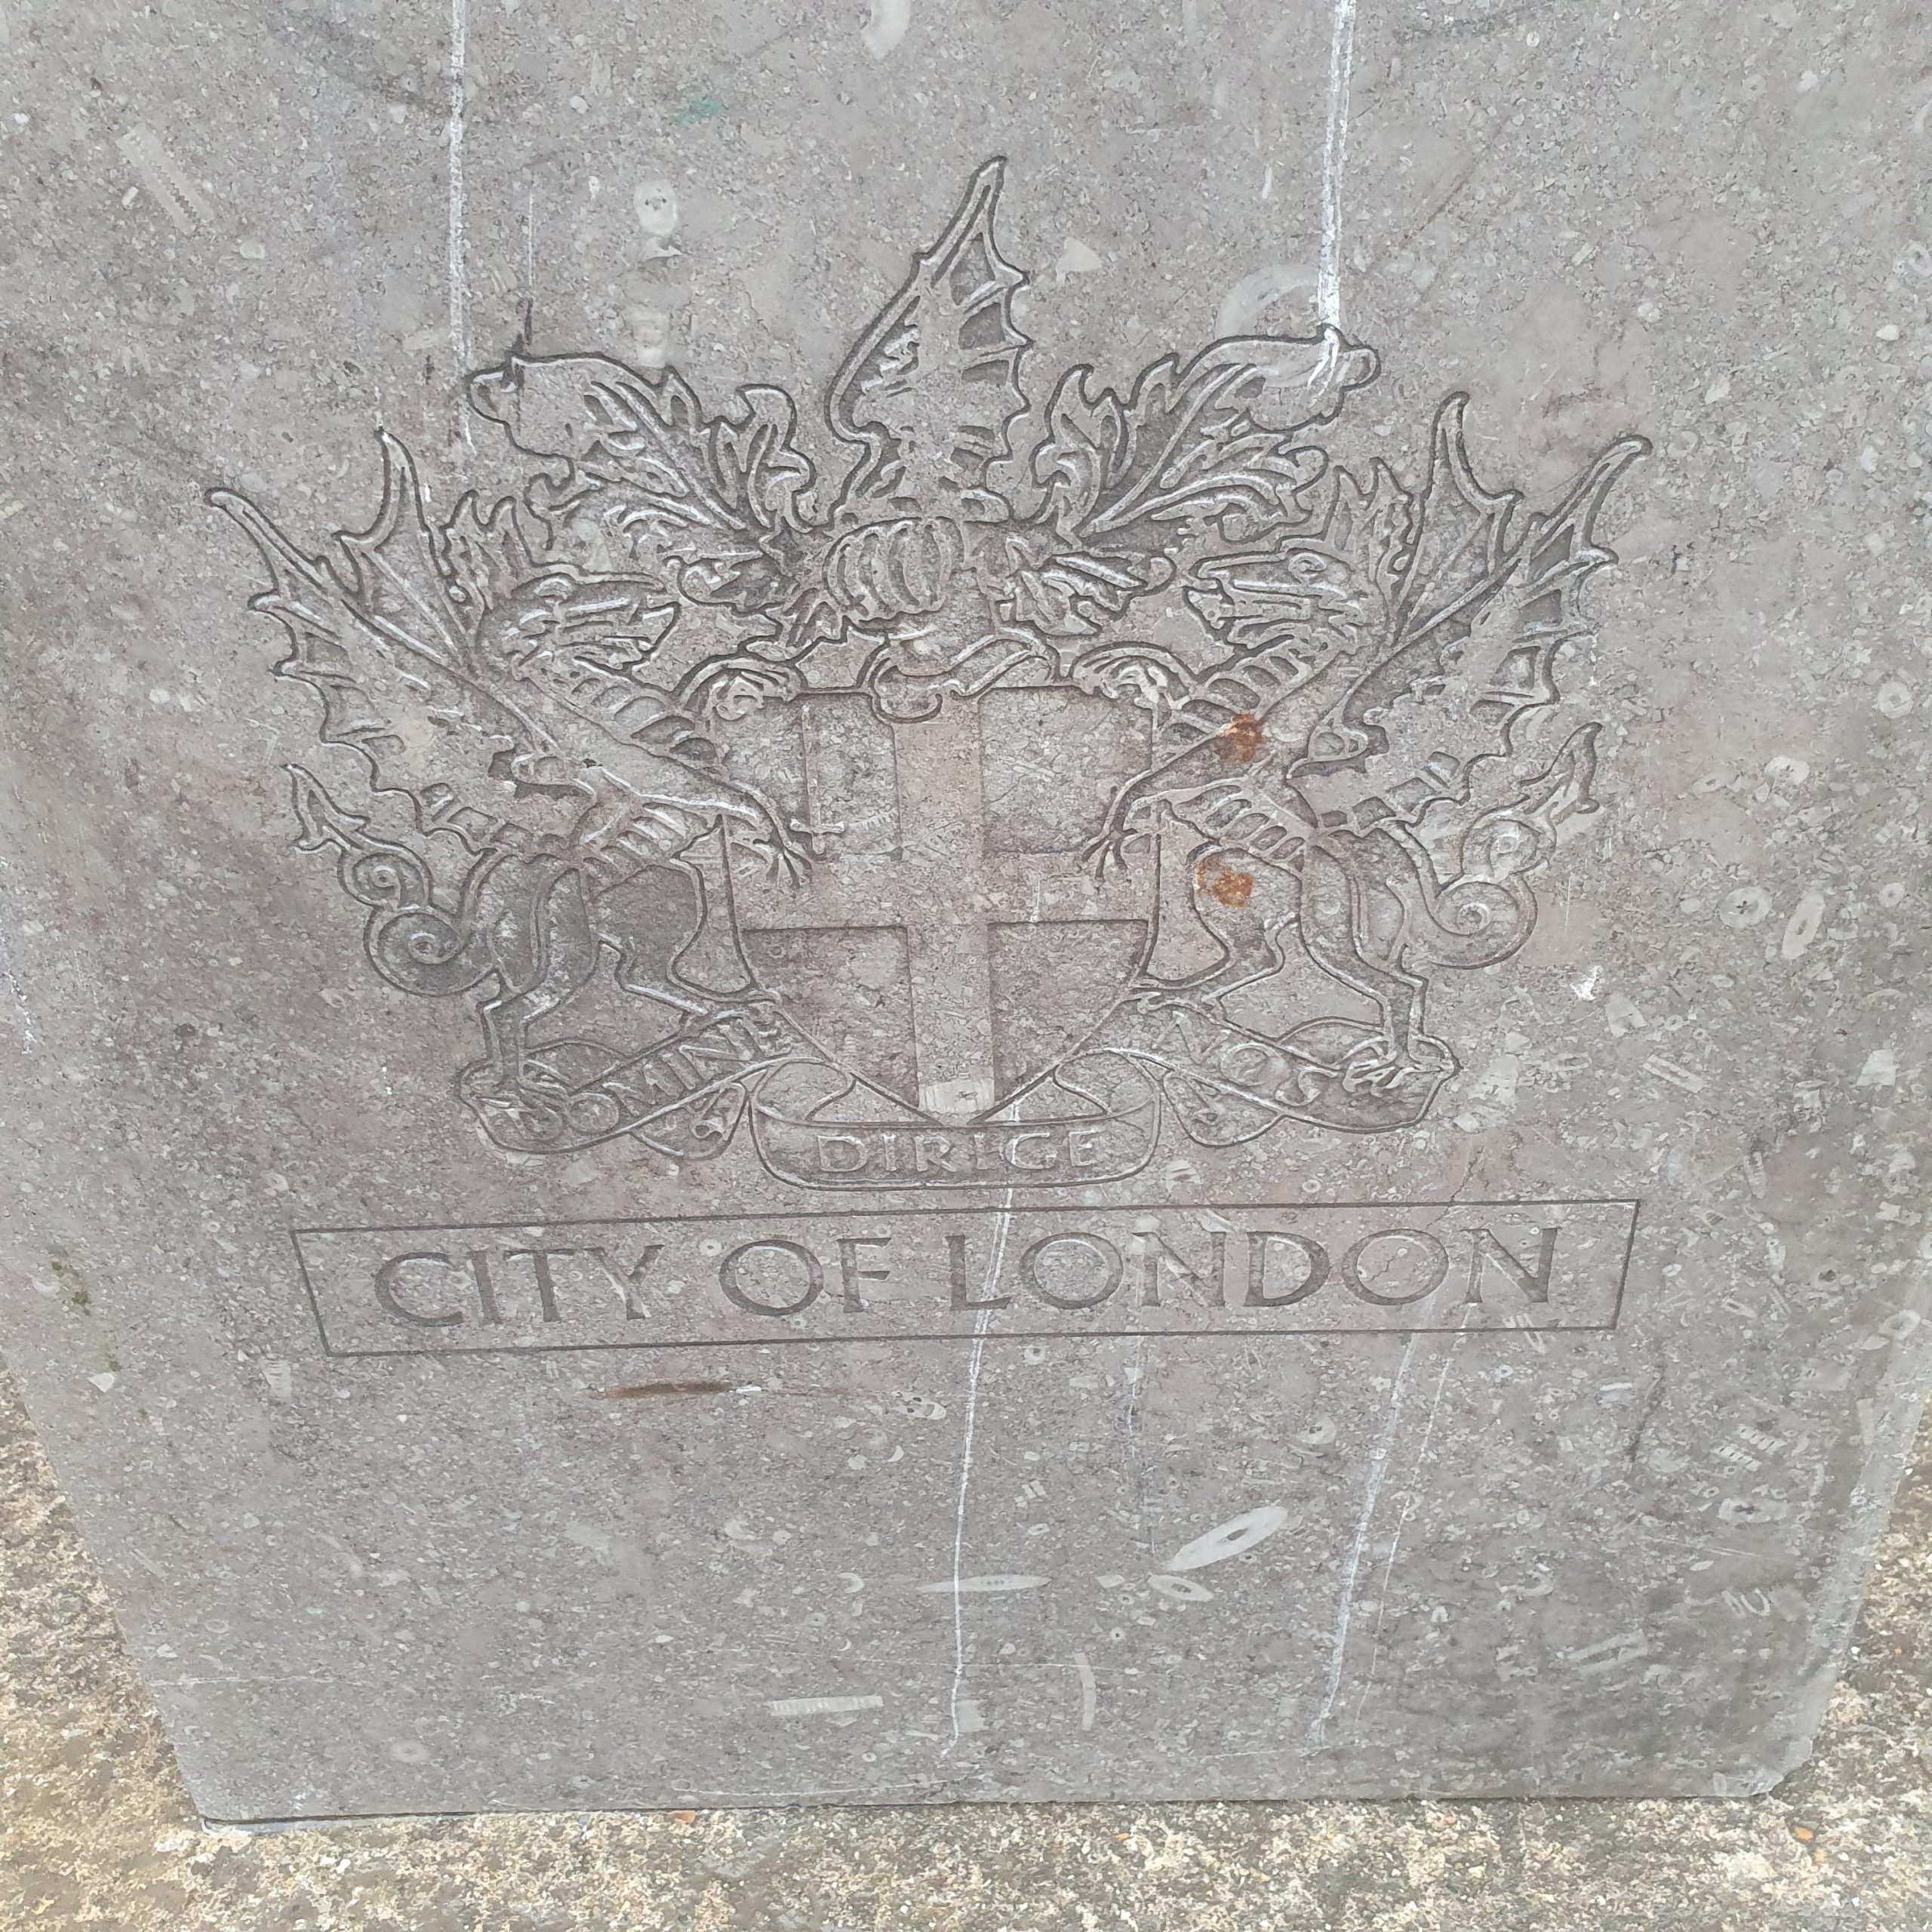 City of London – Grey Granite Block – Crest of the “City of London”